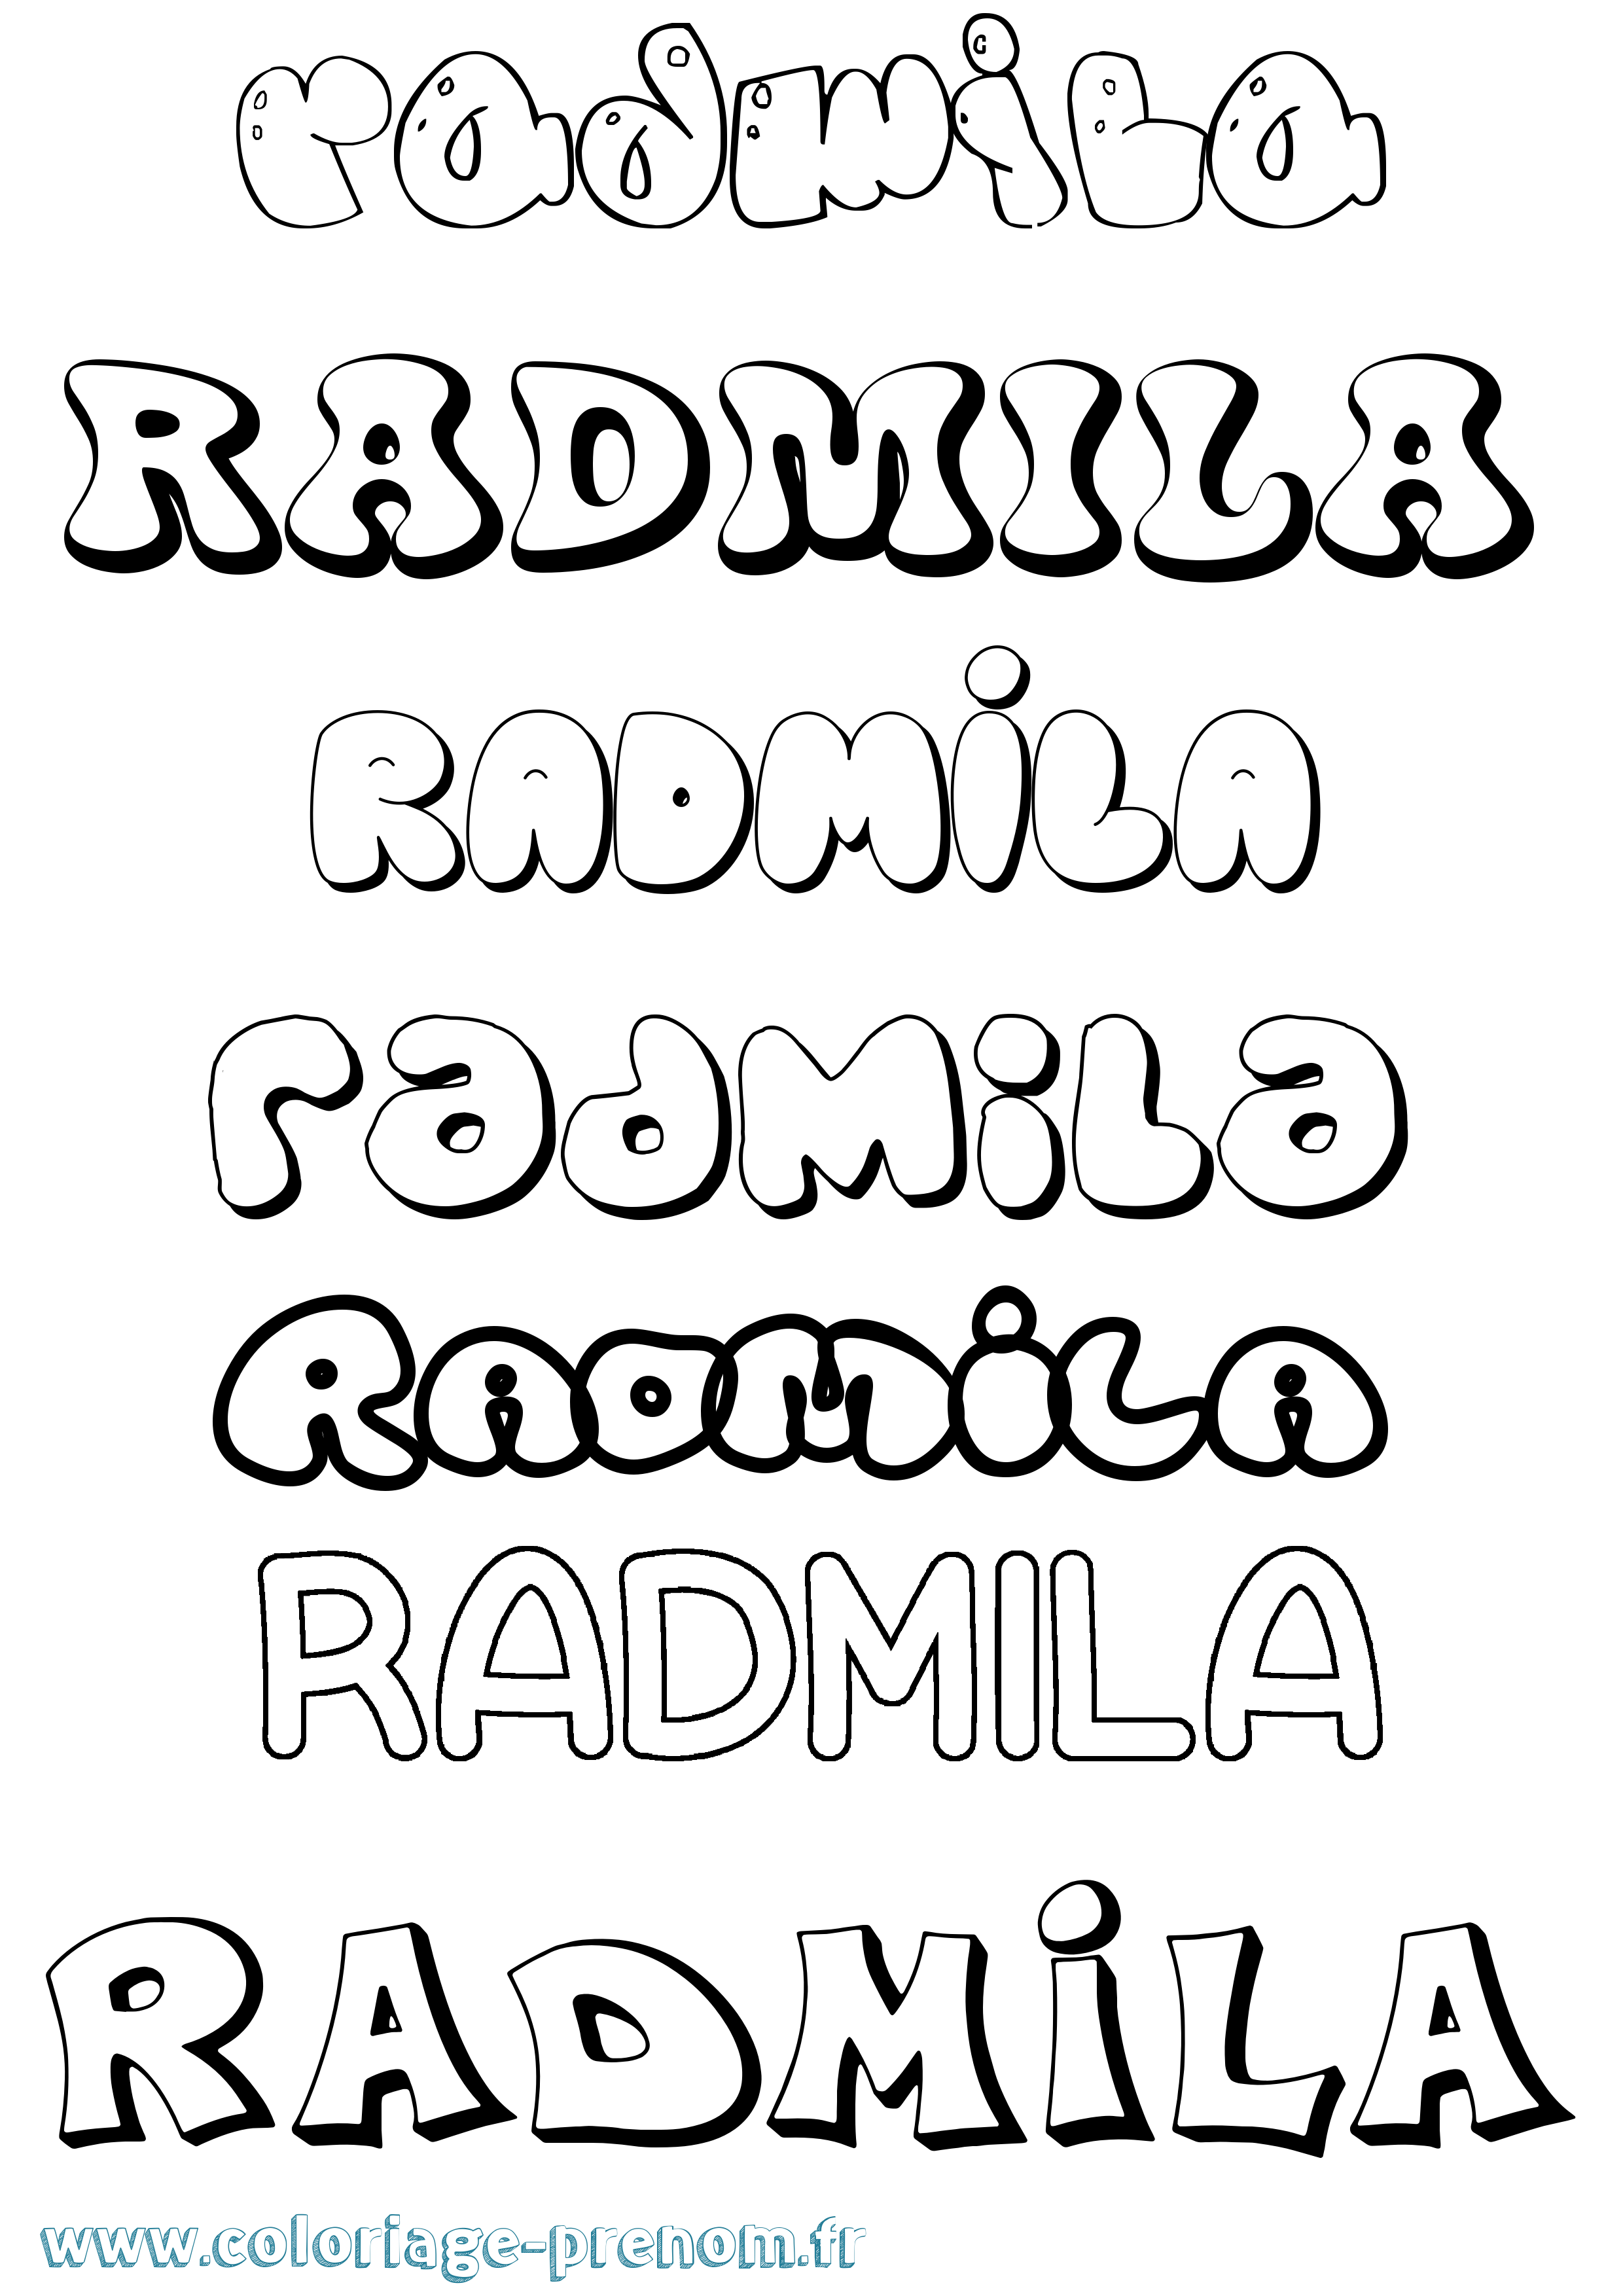 Coloriage prénom Radmila Bubble